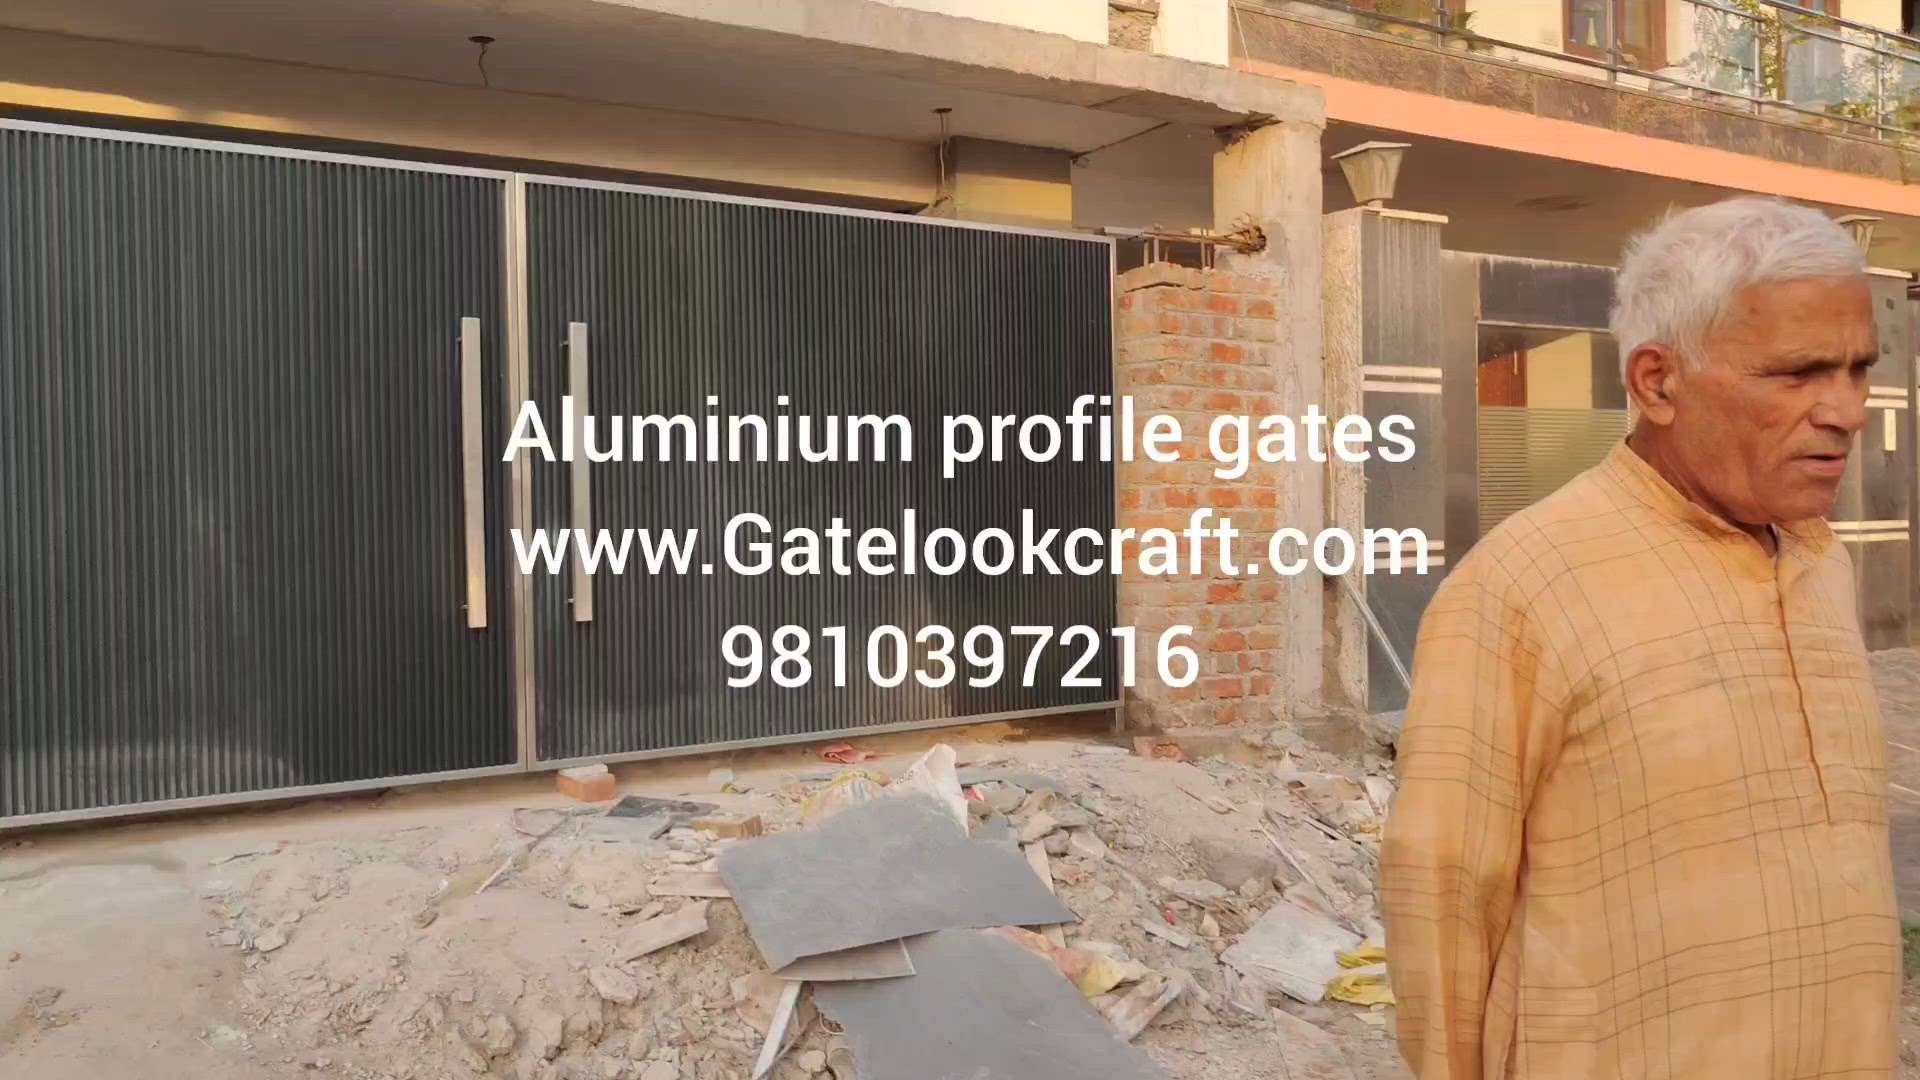 Aluminium profile gates by Hibza sterling interiors pvt ltd in #gatelookcraft #gatedesign #aluminiumprofilegates #MainGates #frontelevation #fancygates #